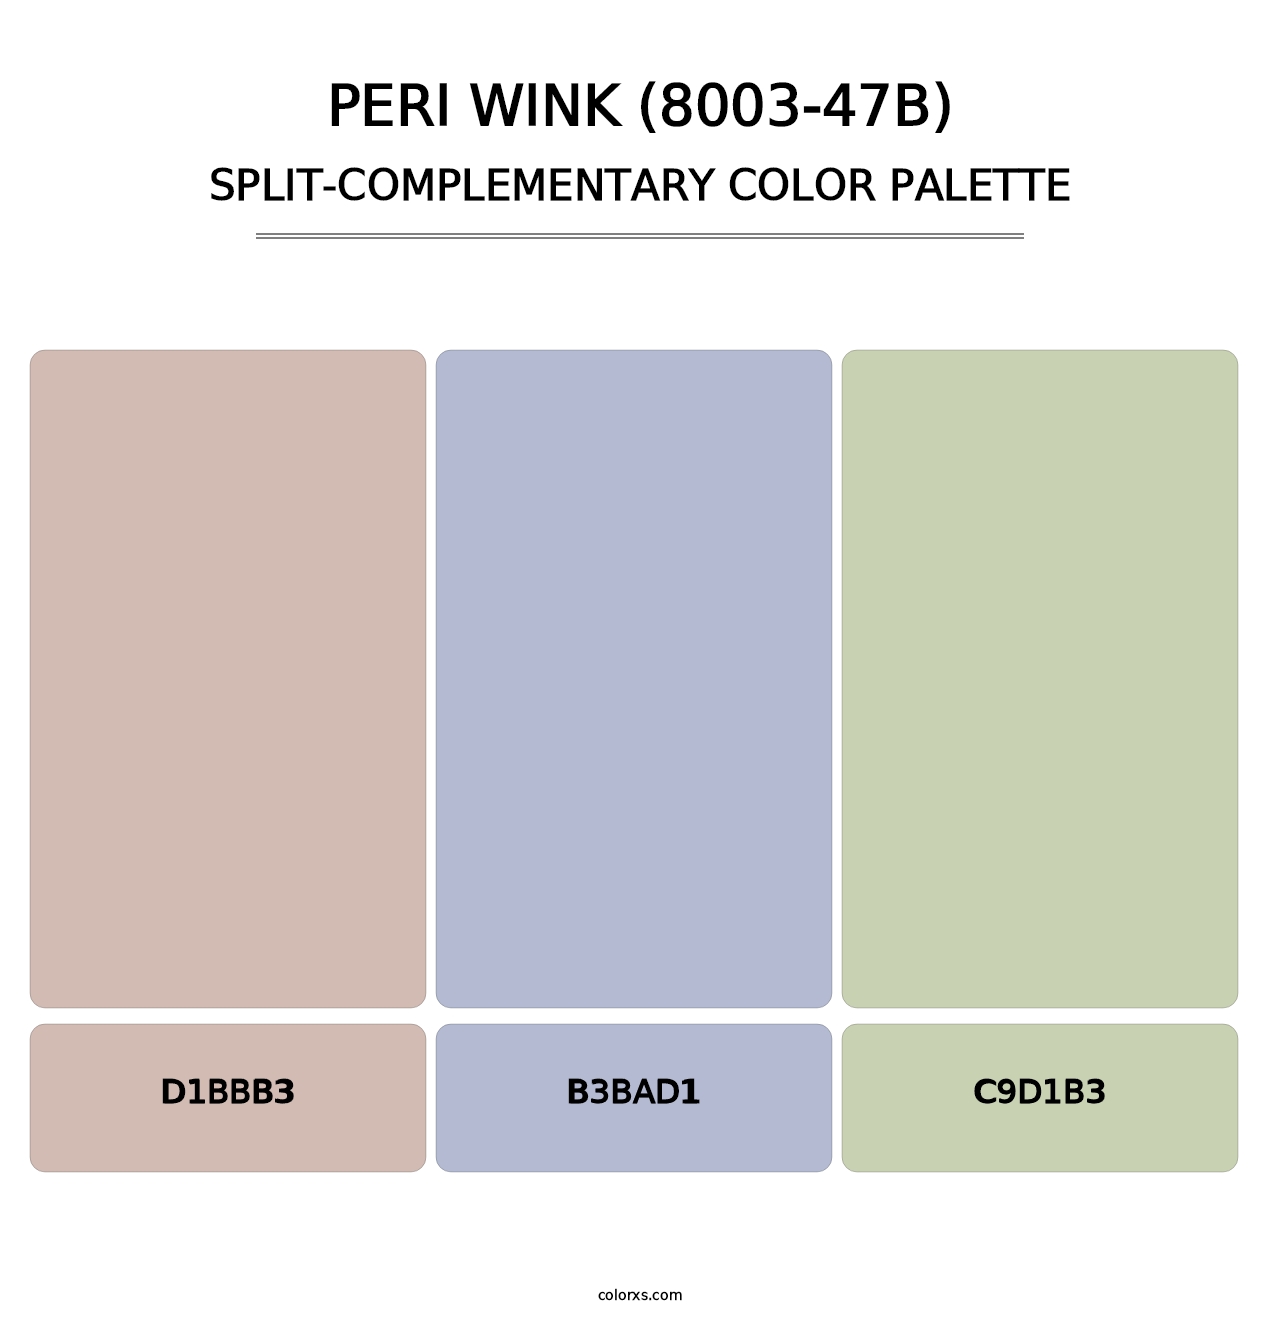 Peri Wink (8003-47B) - Split-Complementary Color Palette